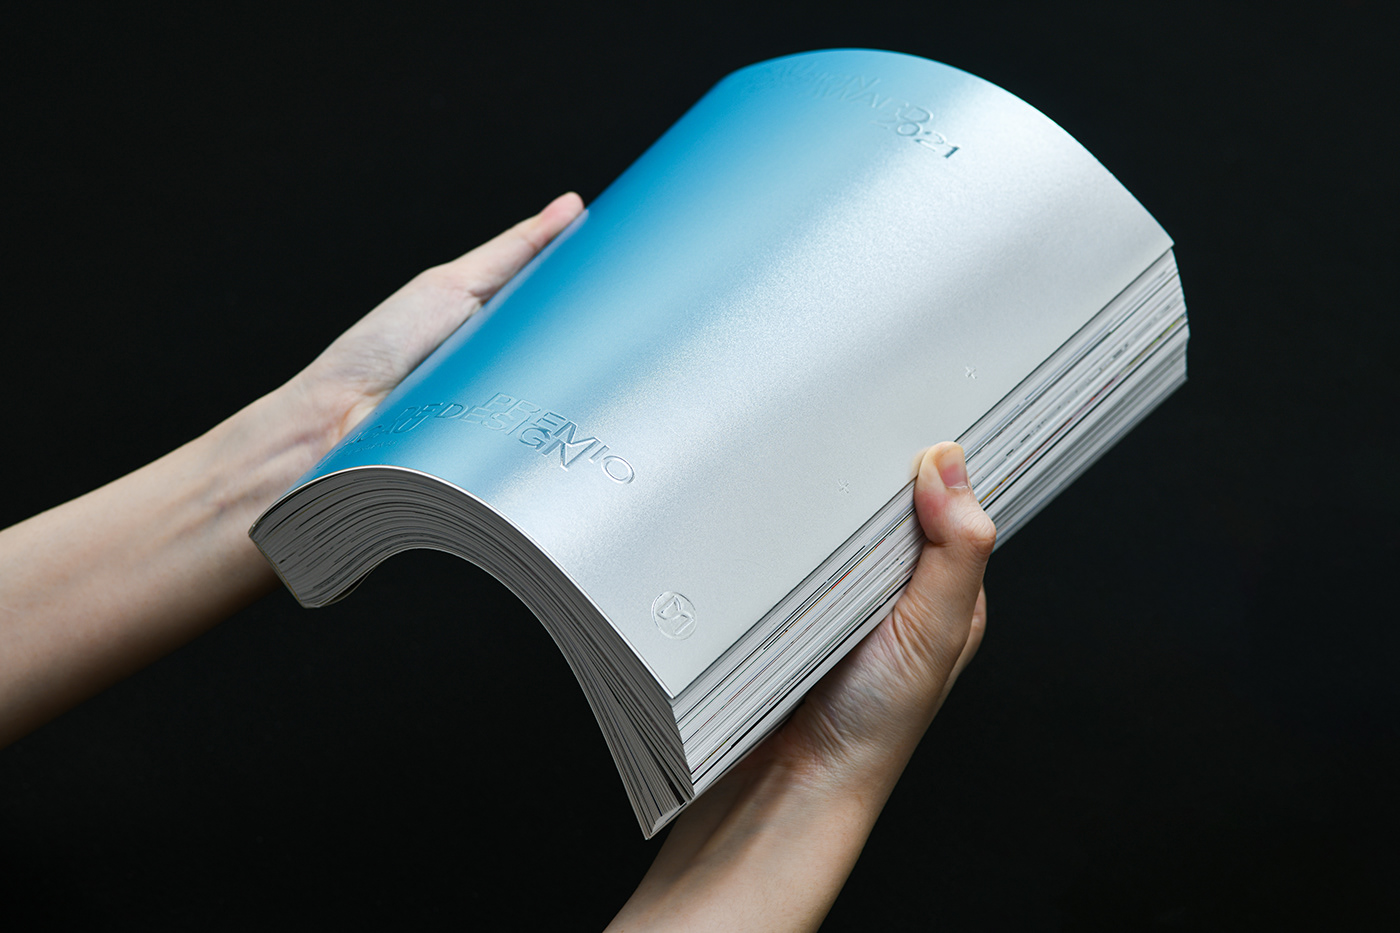 award winning book design Layout print editorial loksophy macao design macau macau design yearbook